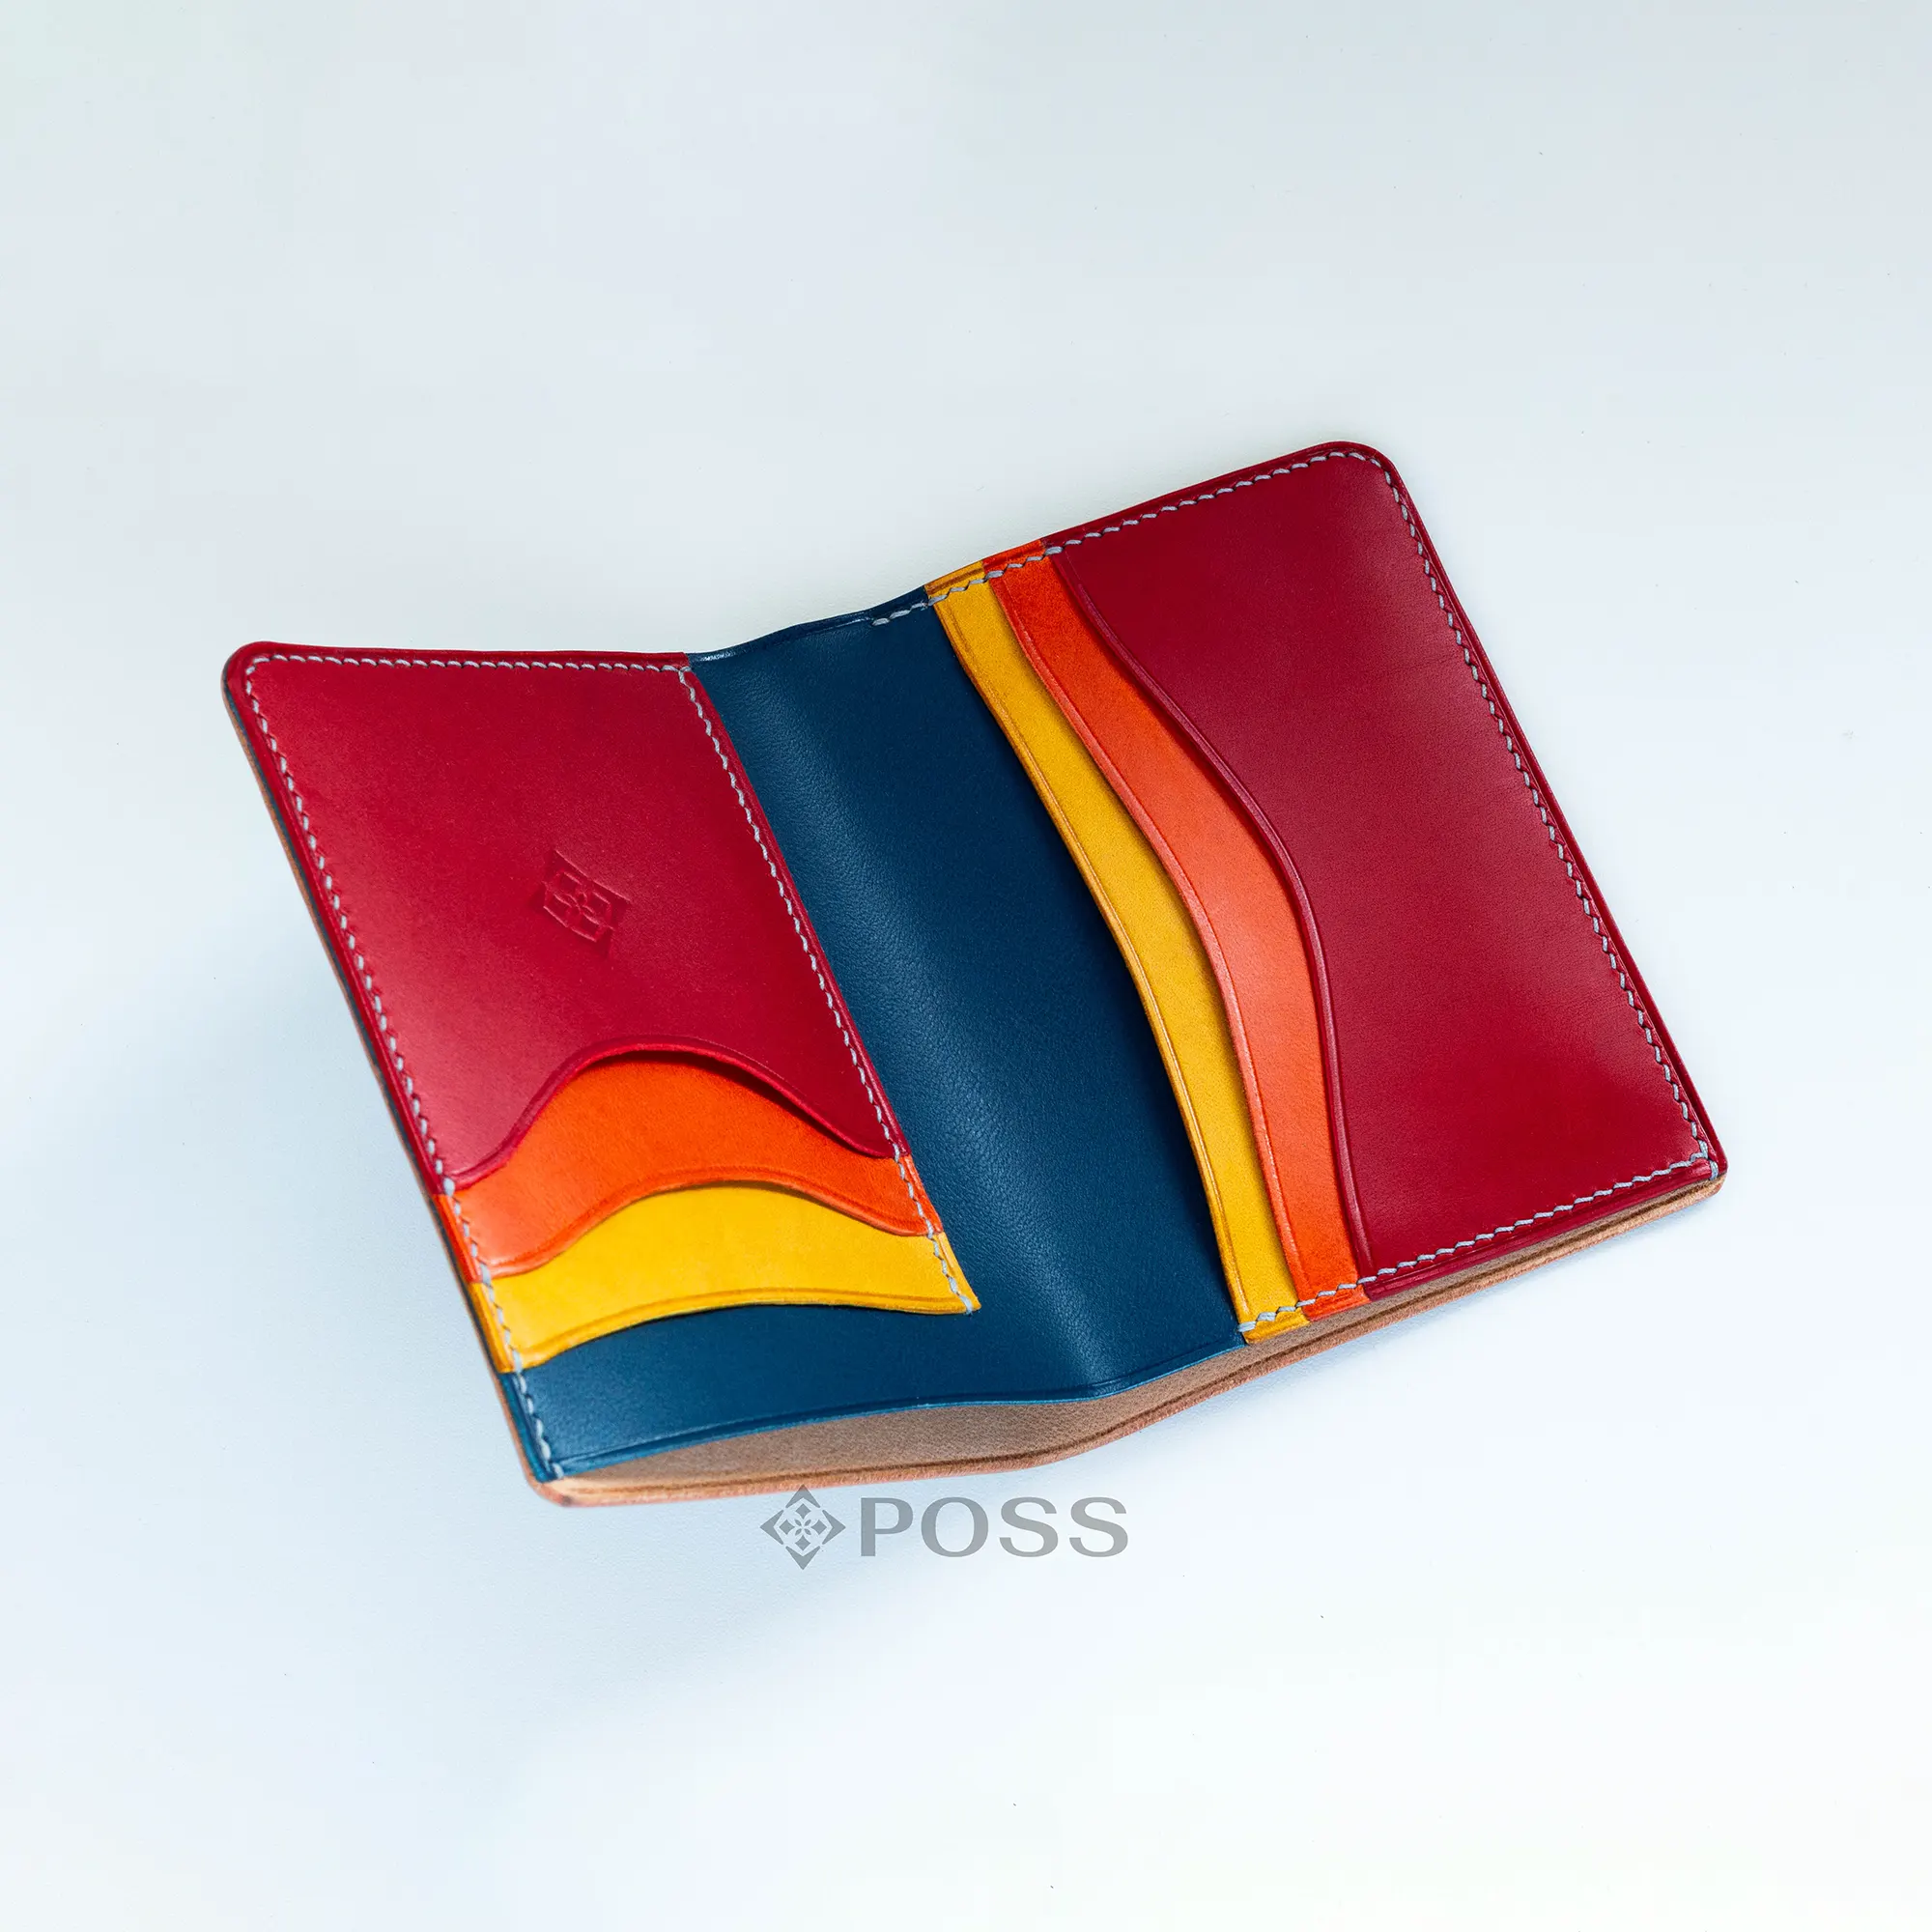 possala designs leather wallet shell cordovan sunset navy pocket organizer